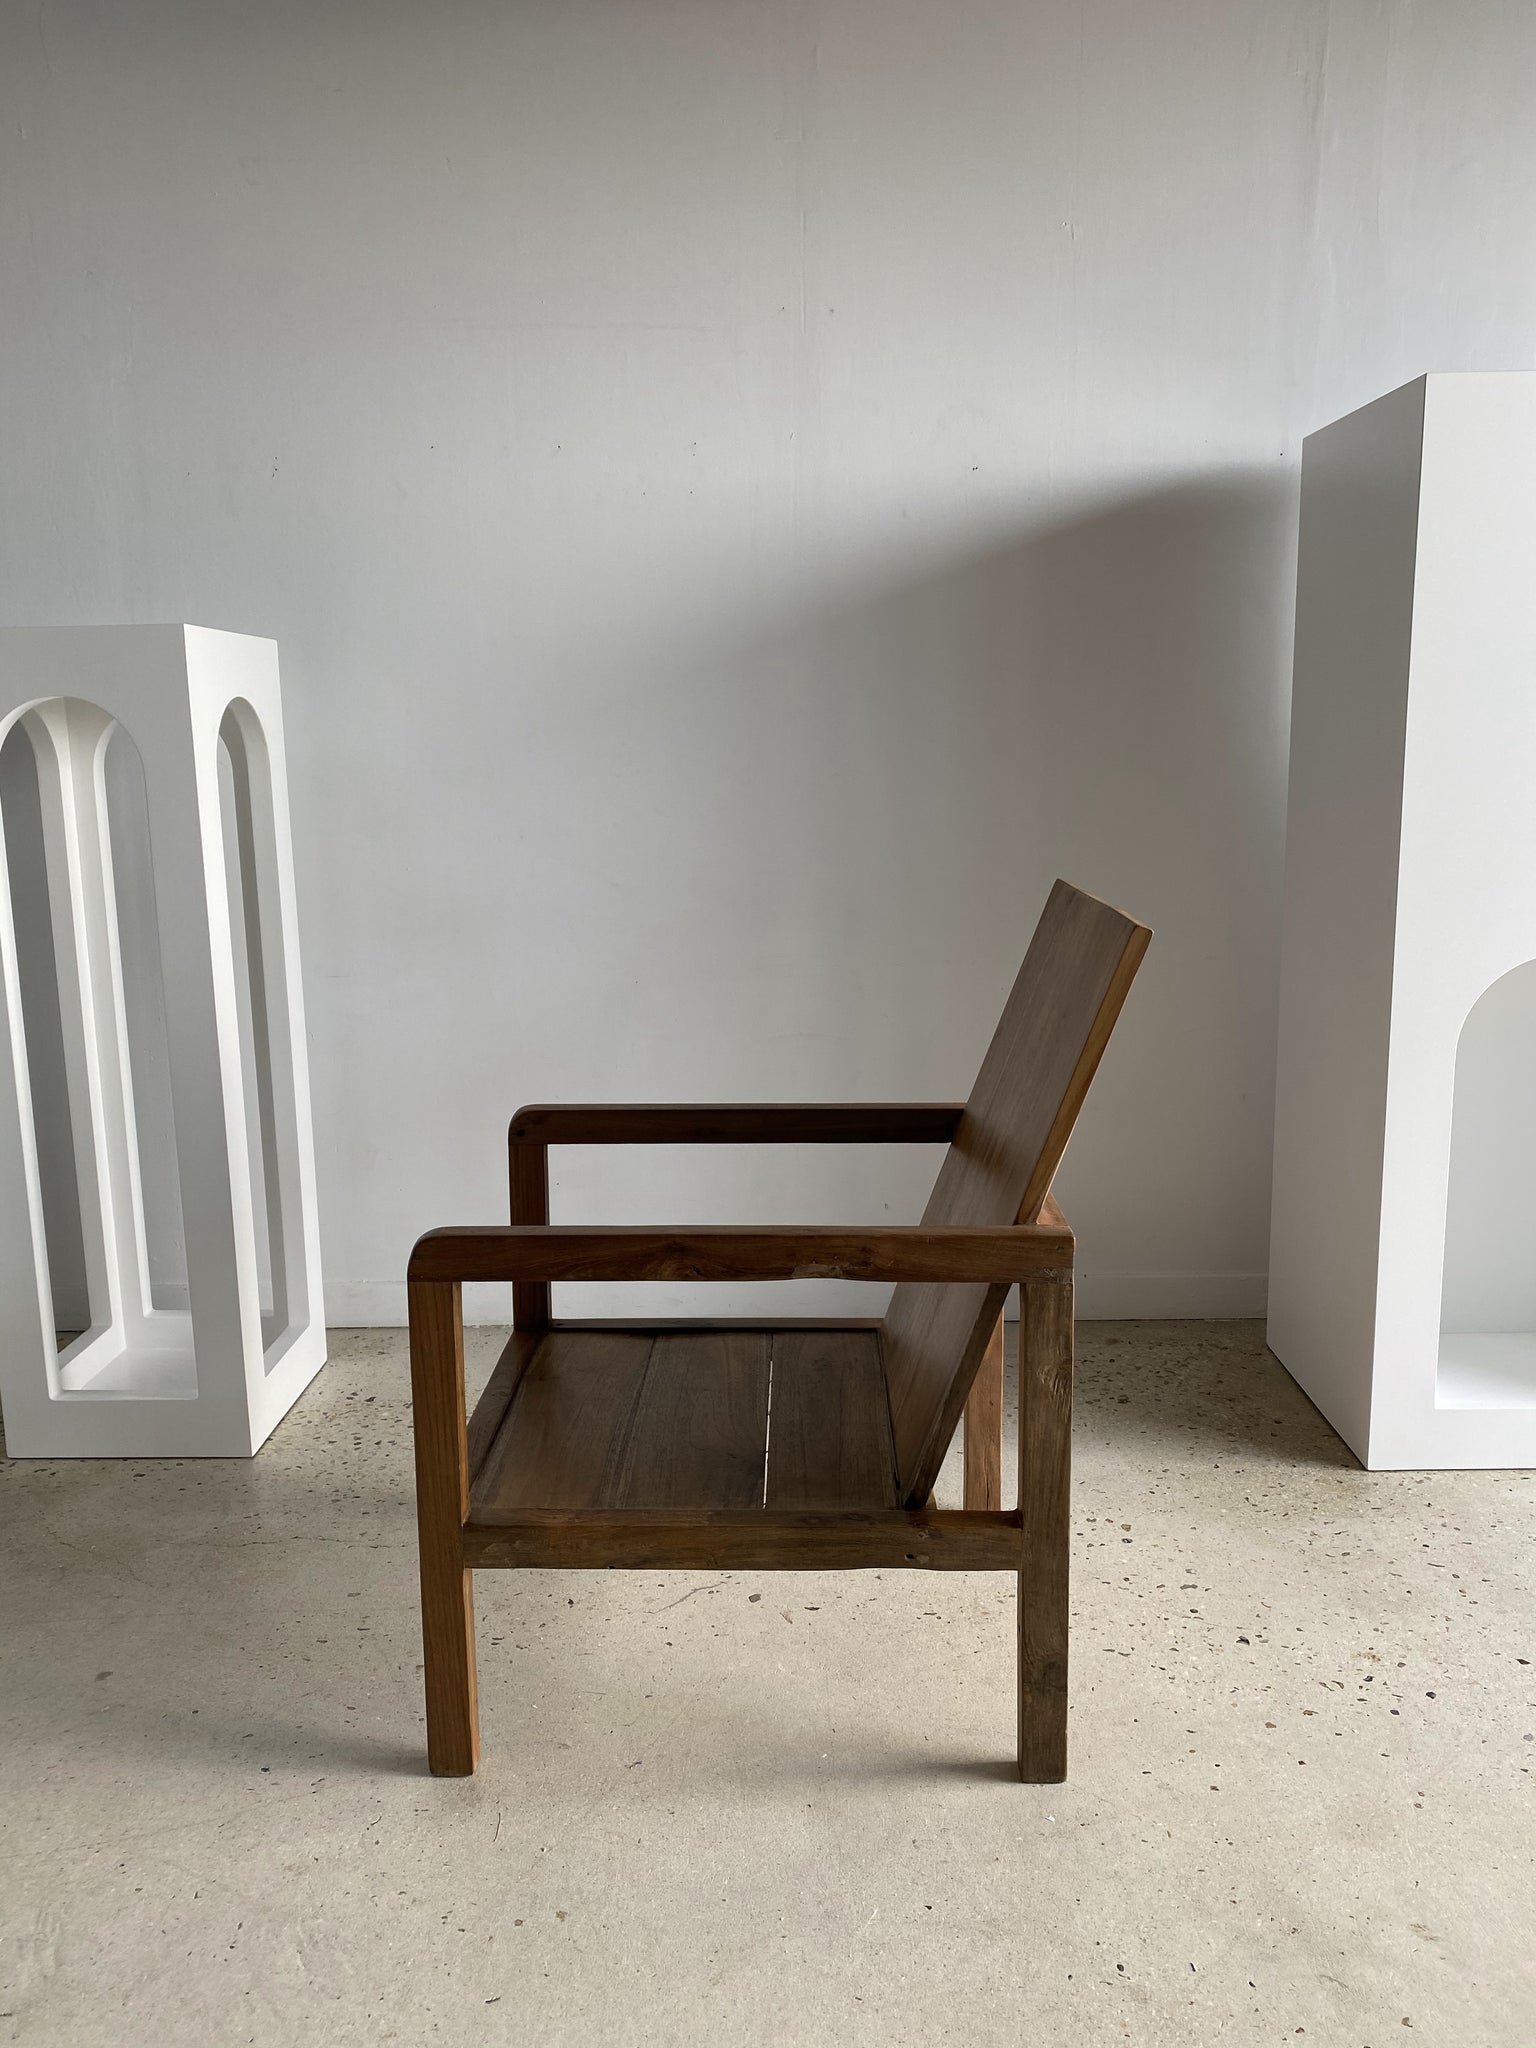 Grand fauteuil en bois naturel (teck) design minimaliste